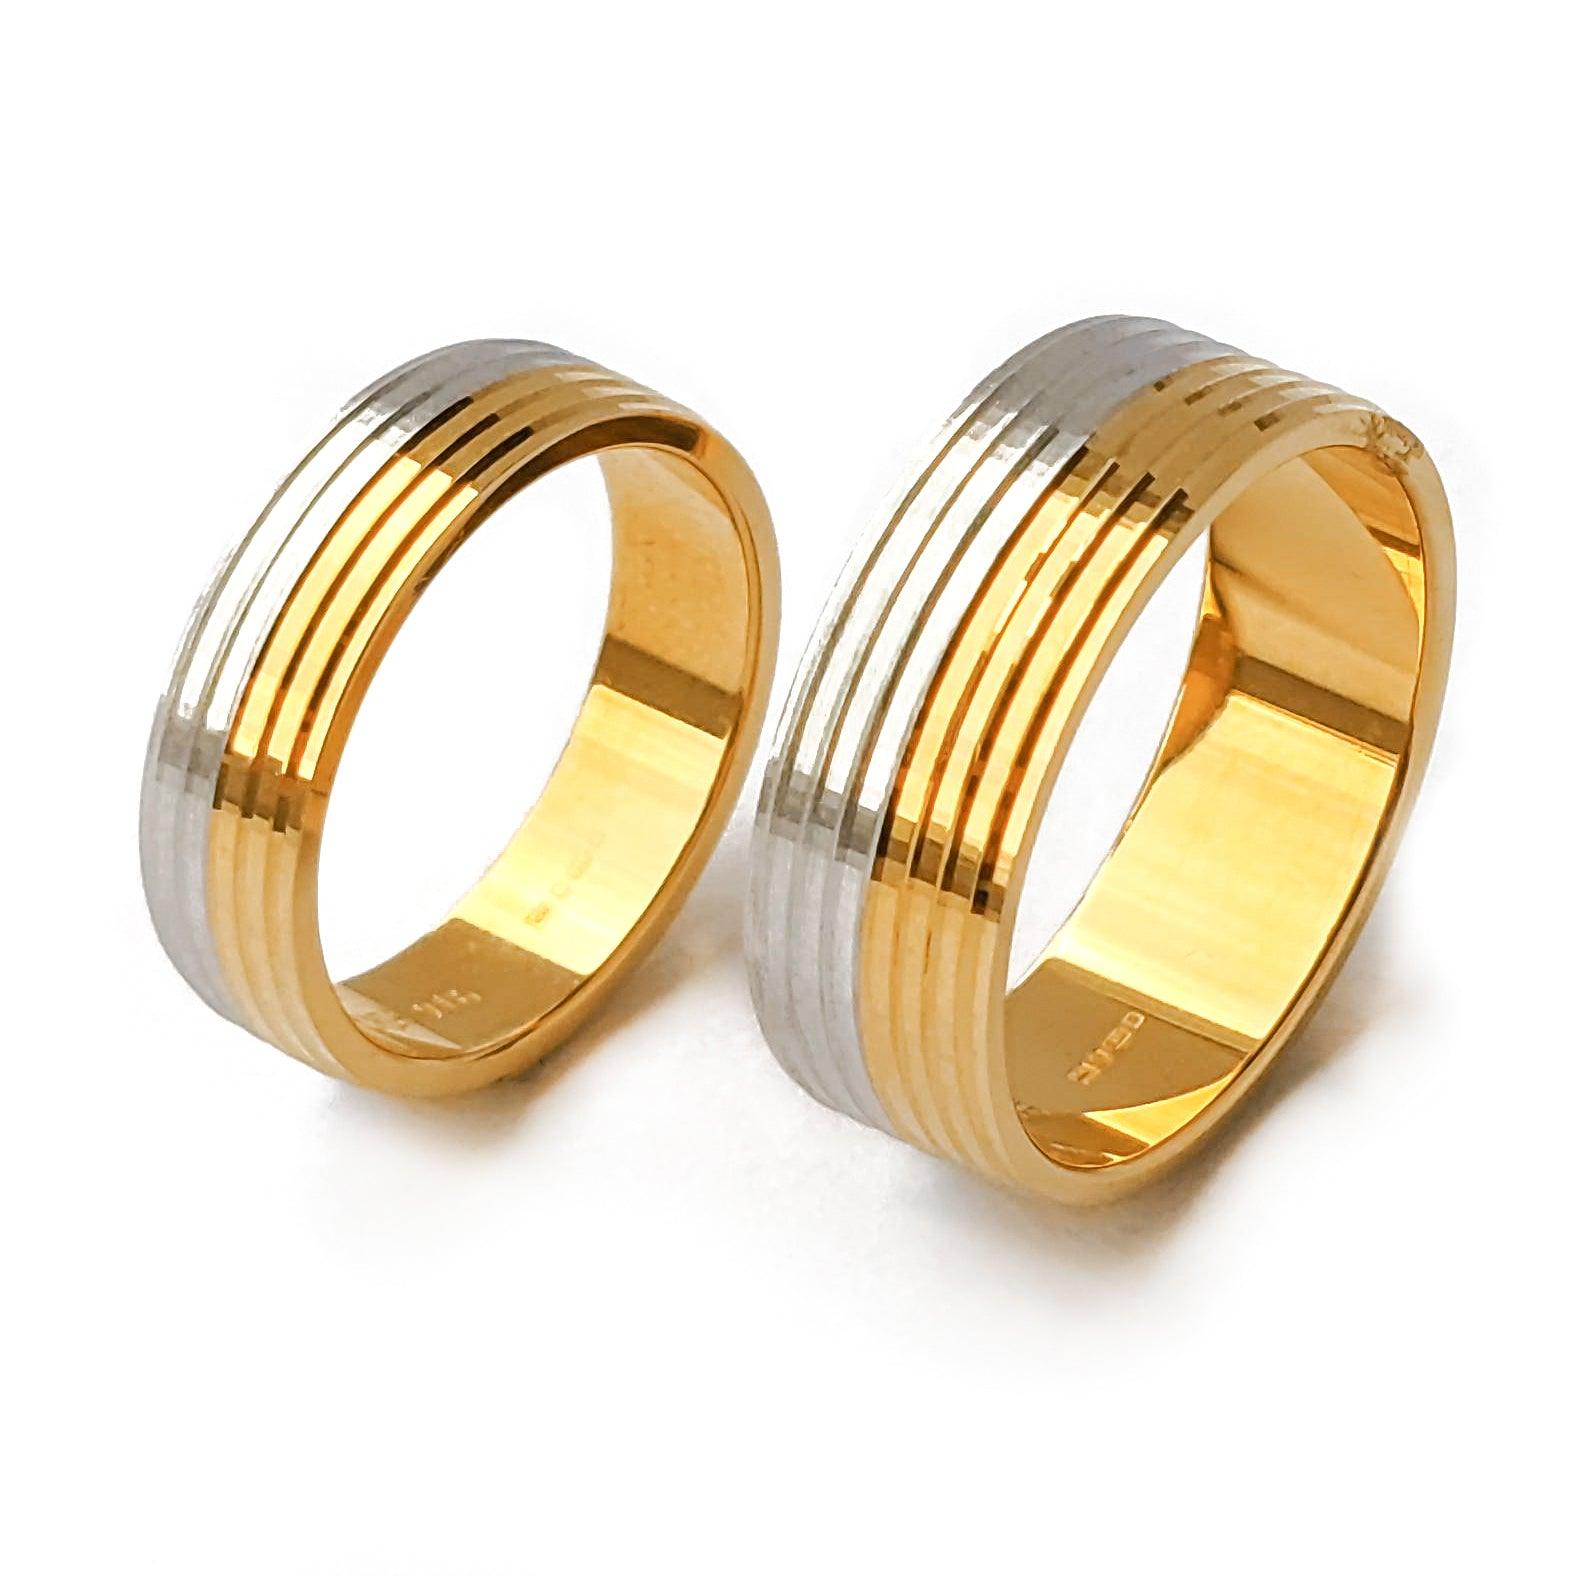 22ct Gold Wedding Band with Diamond Cut and Rhodium Finish LR/GR-8221 - Minar Jewellers